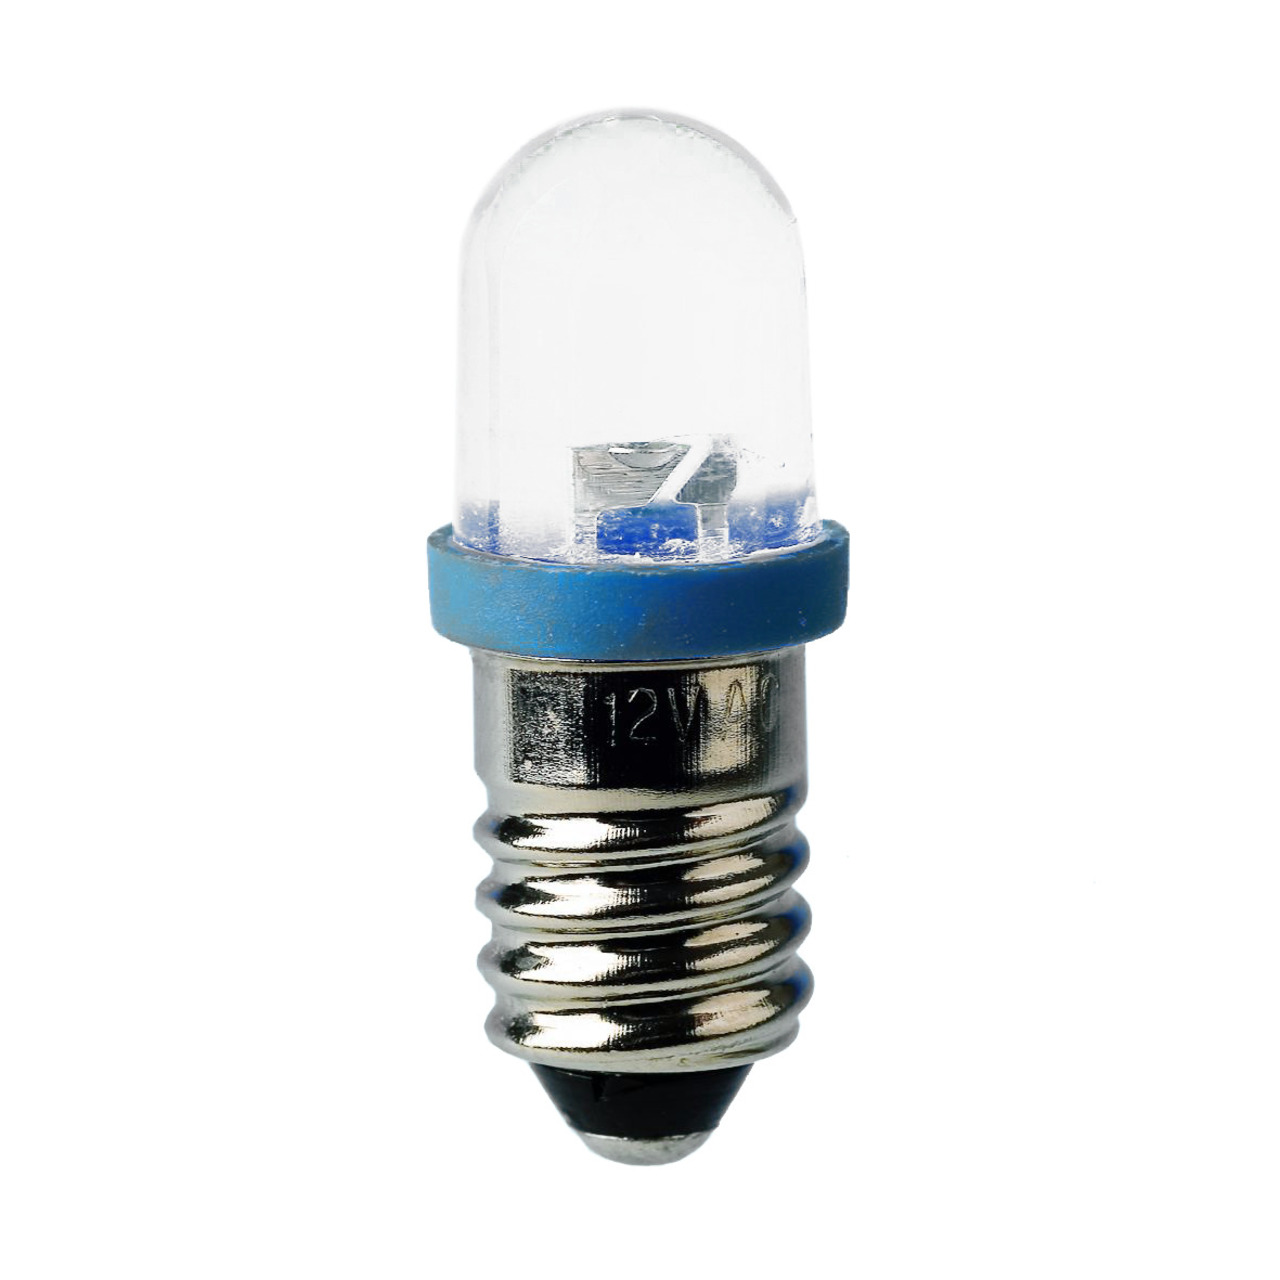 Barthelme LED-Lampe E10 mit Brckengleichrichter- 10 x 28 mm- 230 V- rot unter Komponenten